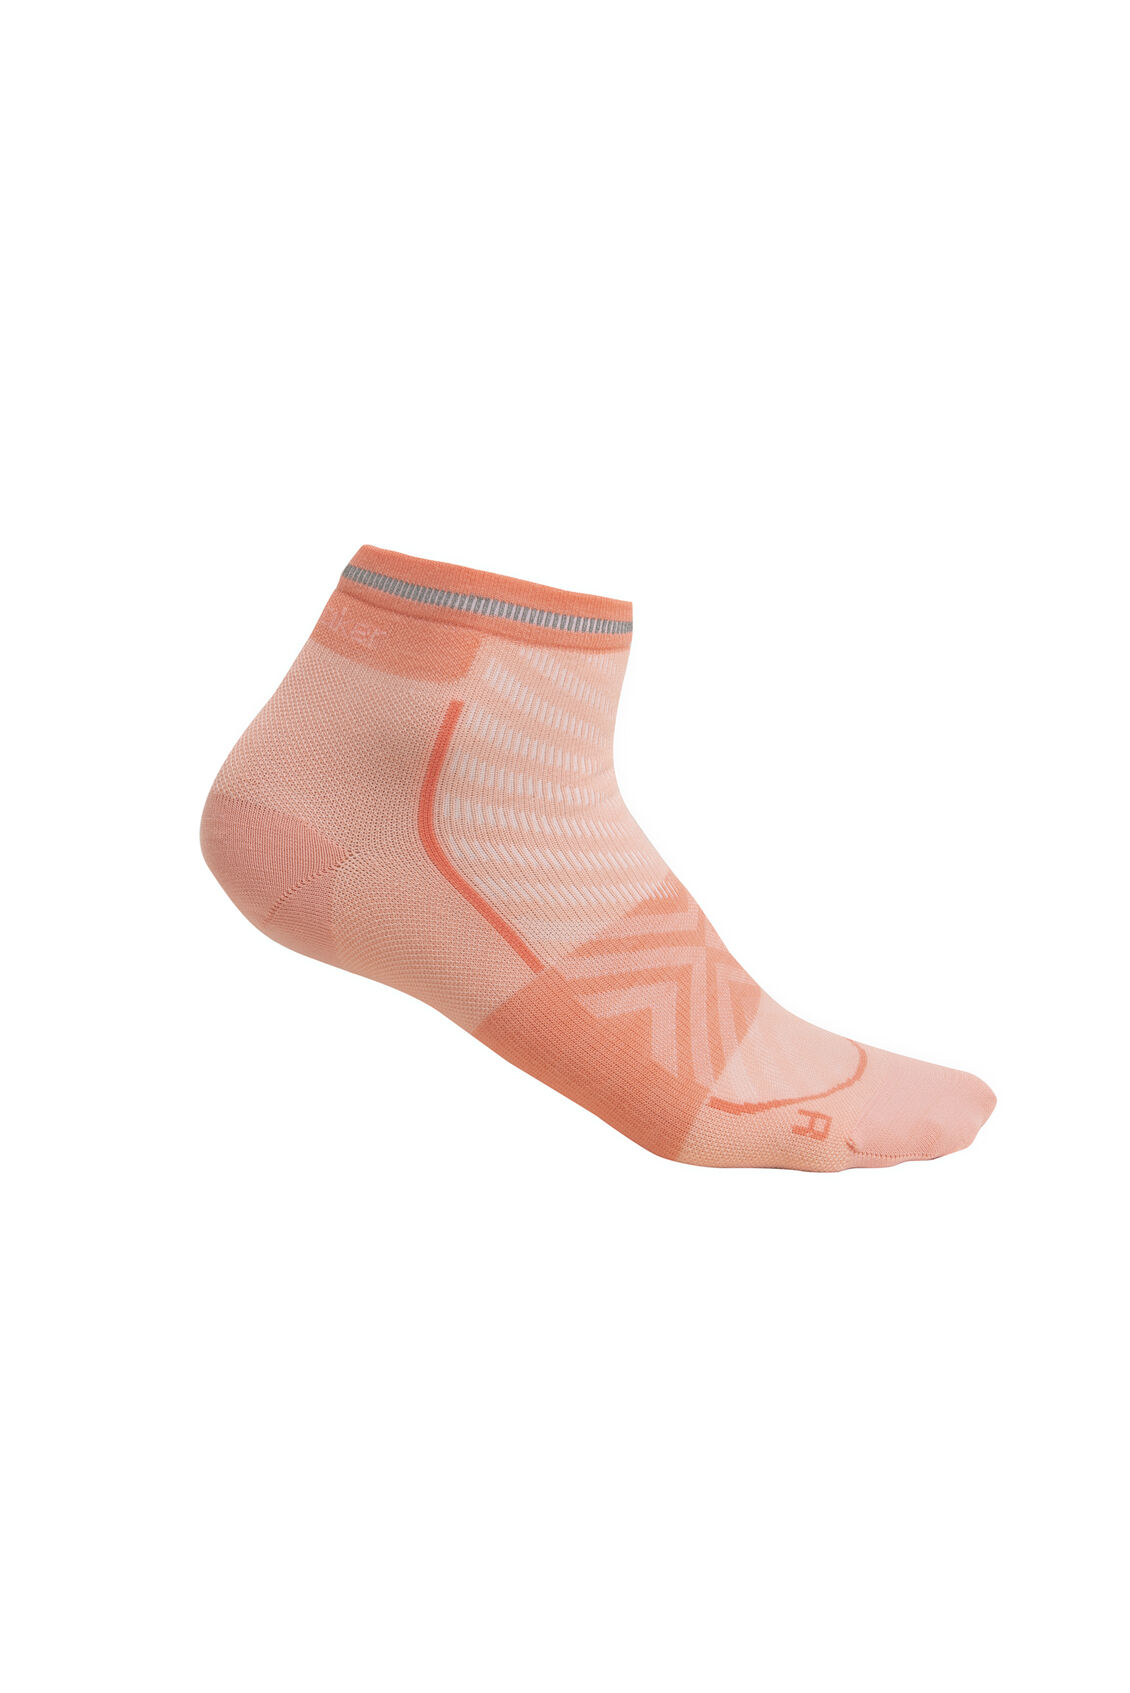 Icebreaker Merino Blend Run+ Ultralight Mini Socks (Women's) - Glow/Tang - Find Your Feet Australia Hobart Launceston Tasmania